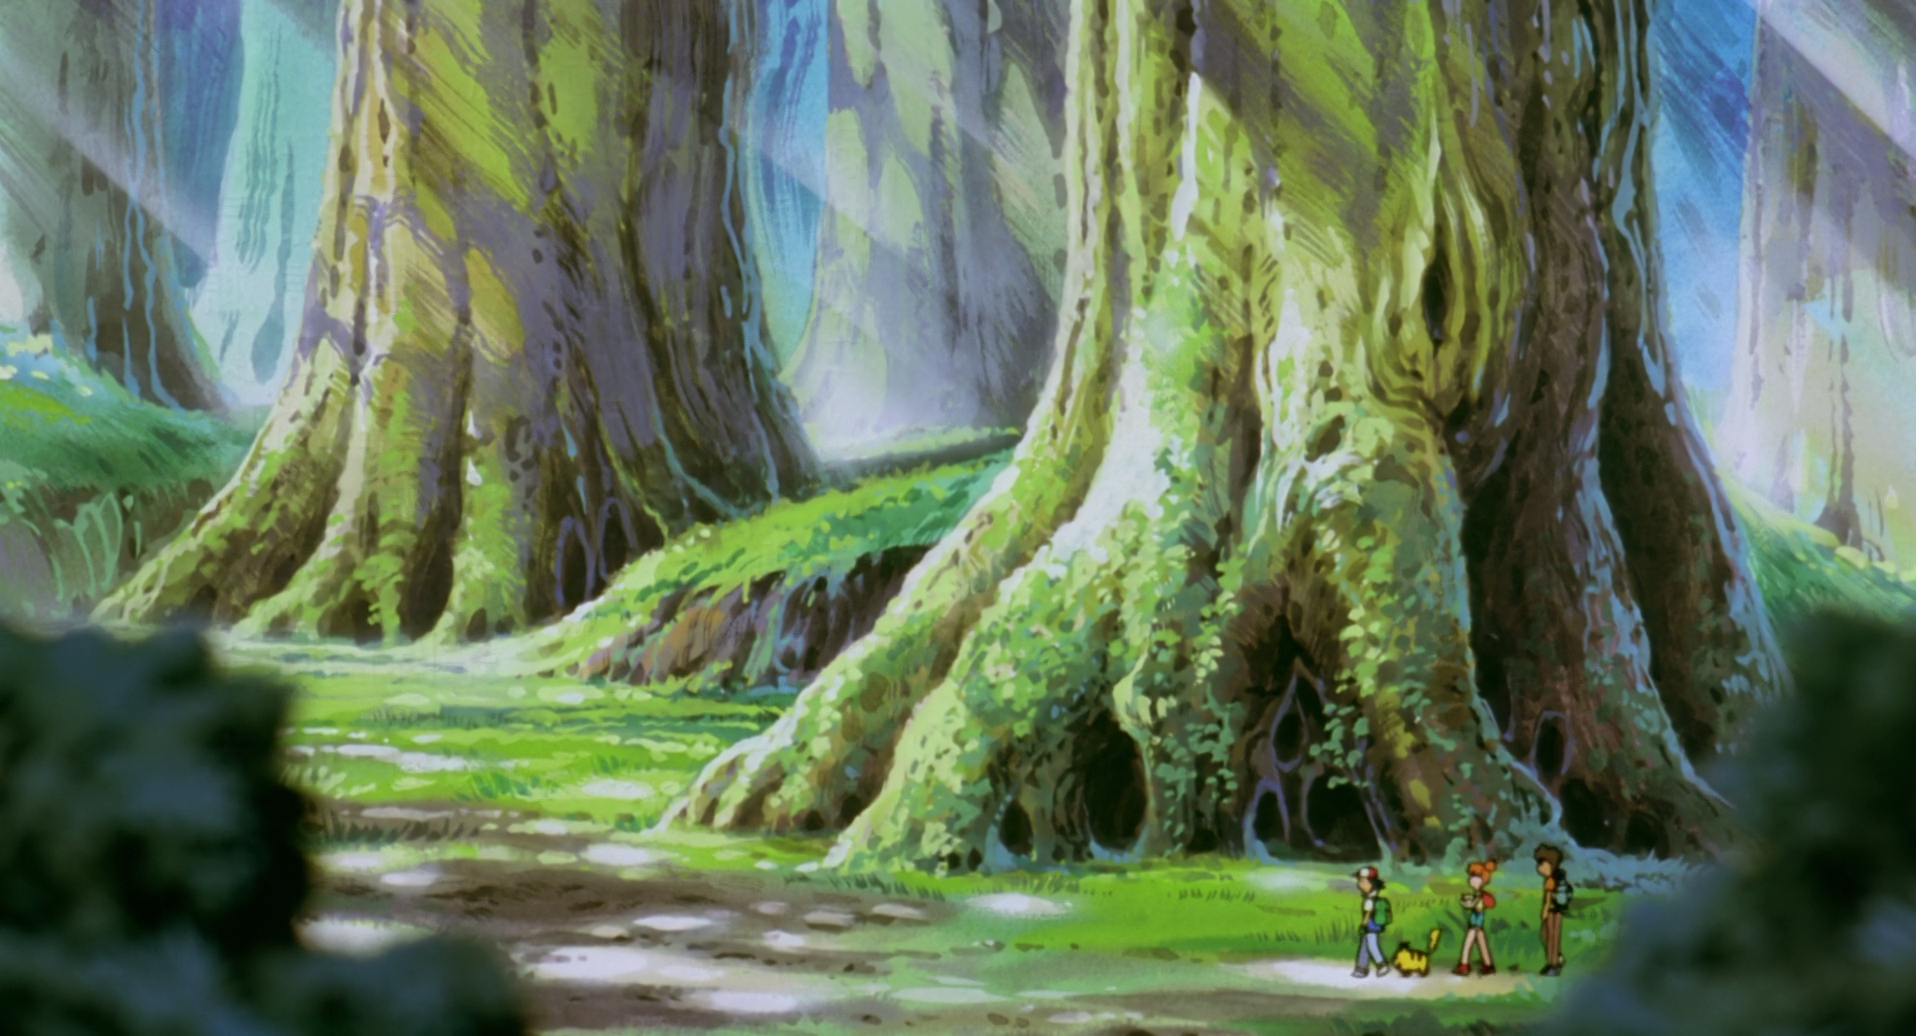 Misty (Pokémon) Wallpaper and Background Imagex1036